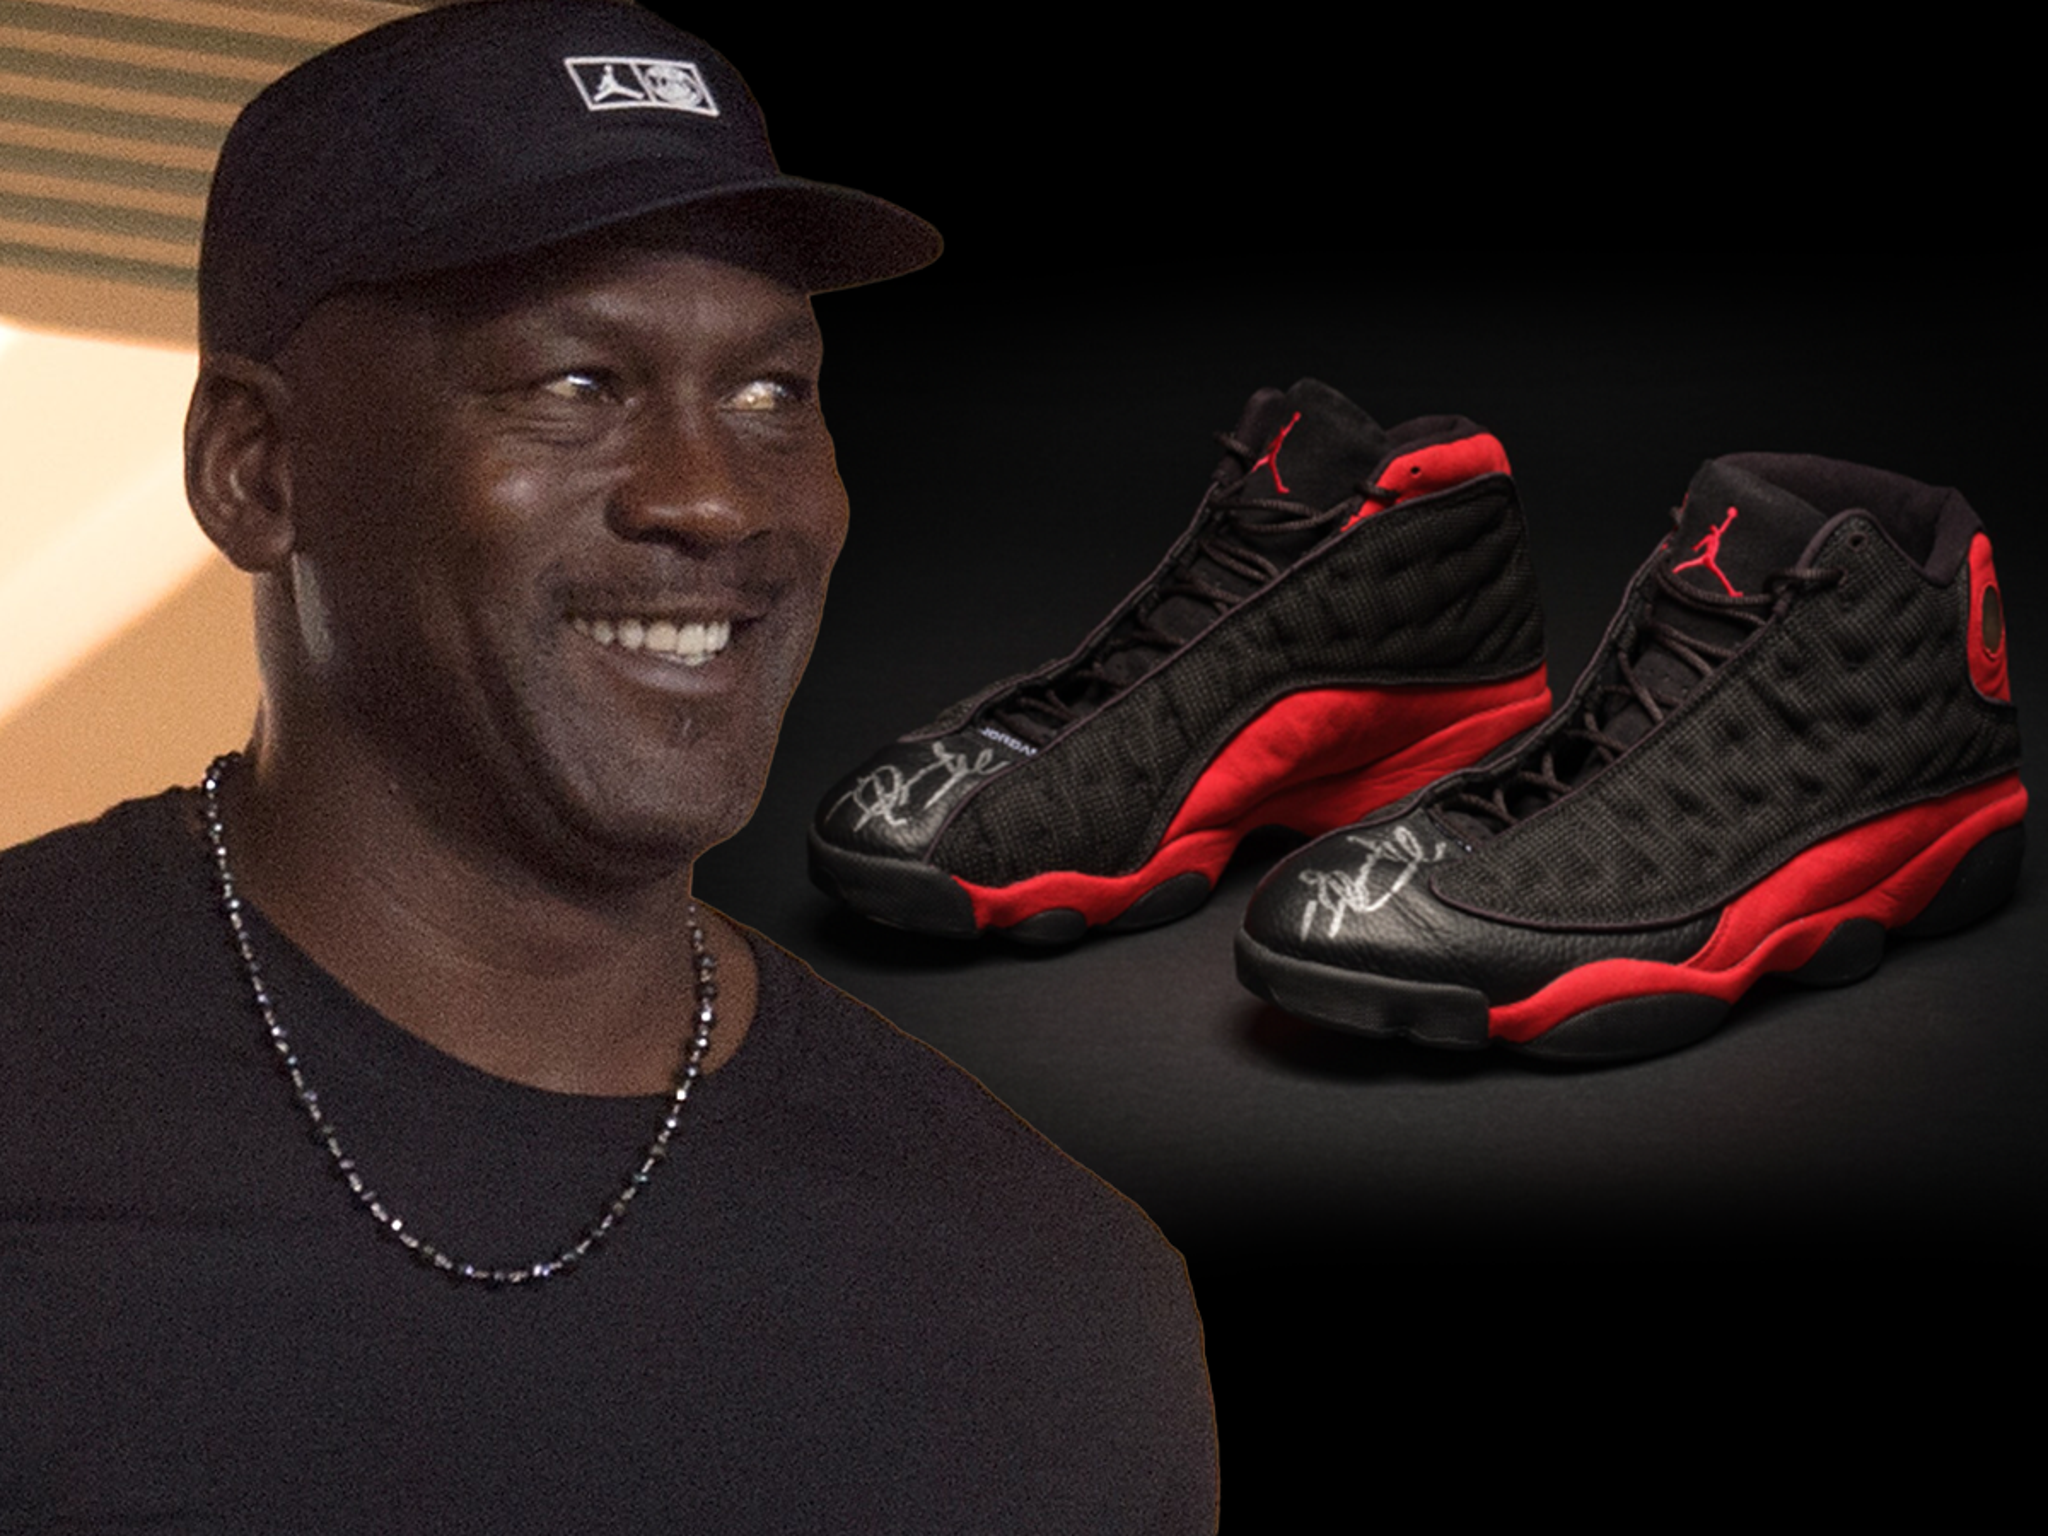 Michael Jordan's 'Last Dance' sneakers sell for a record-breaking